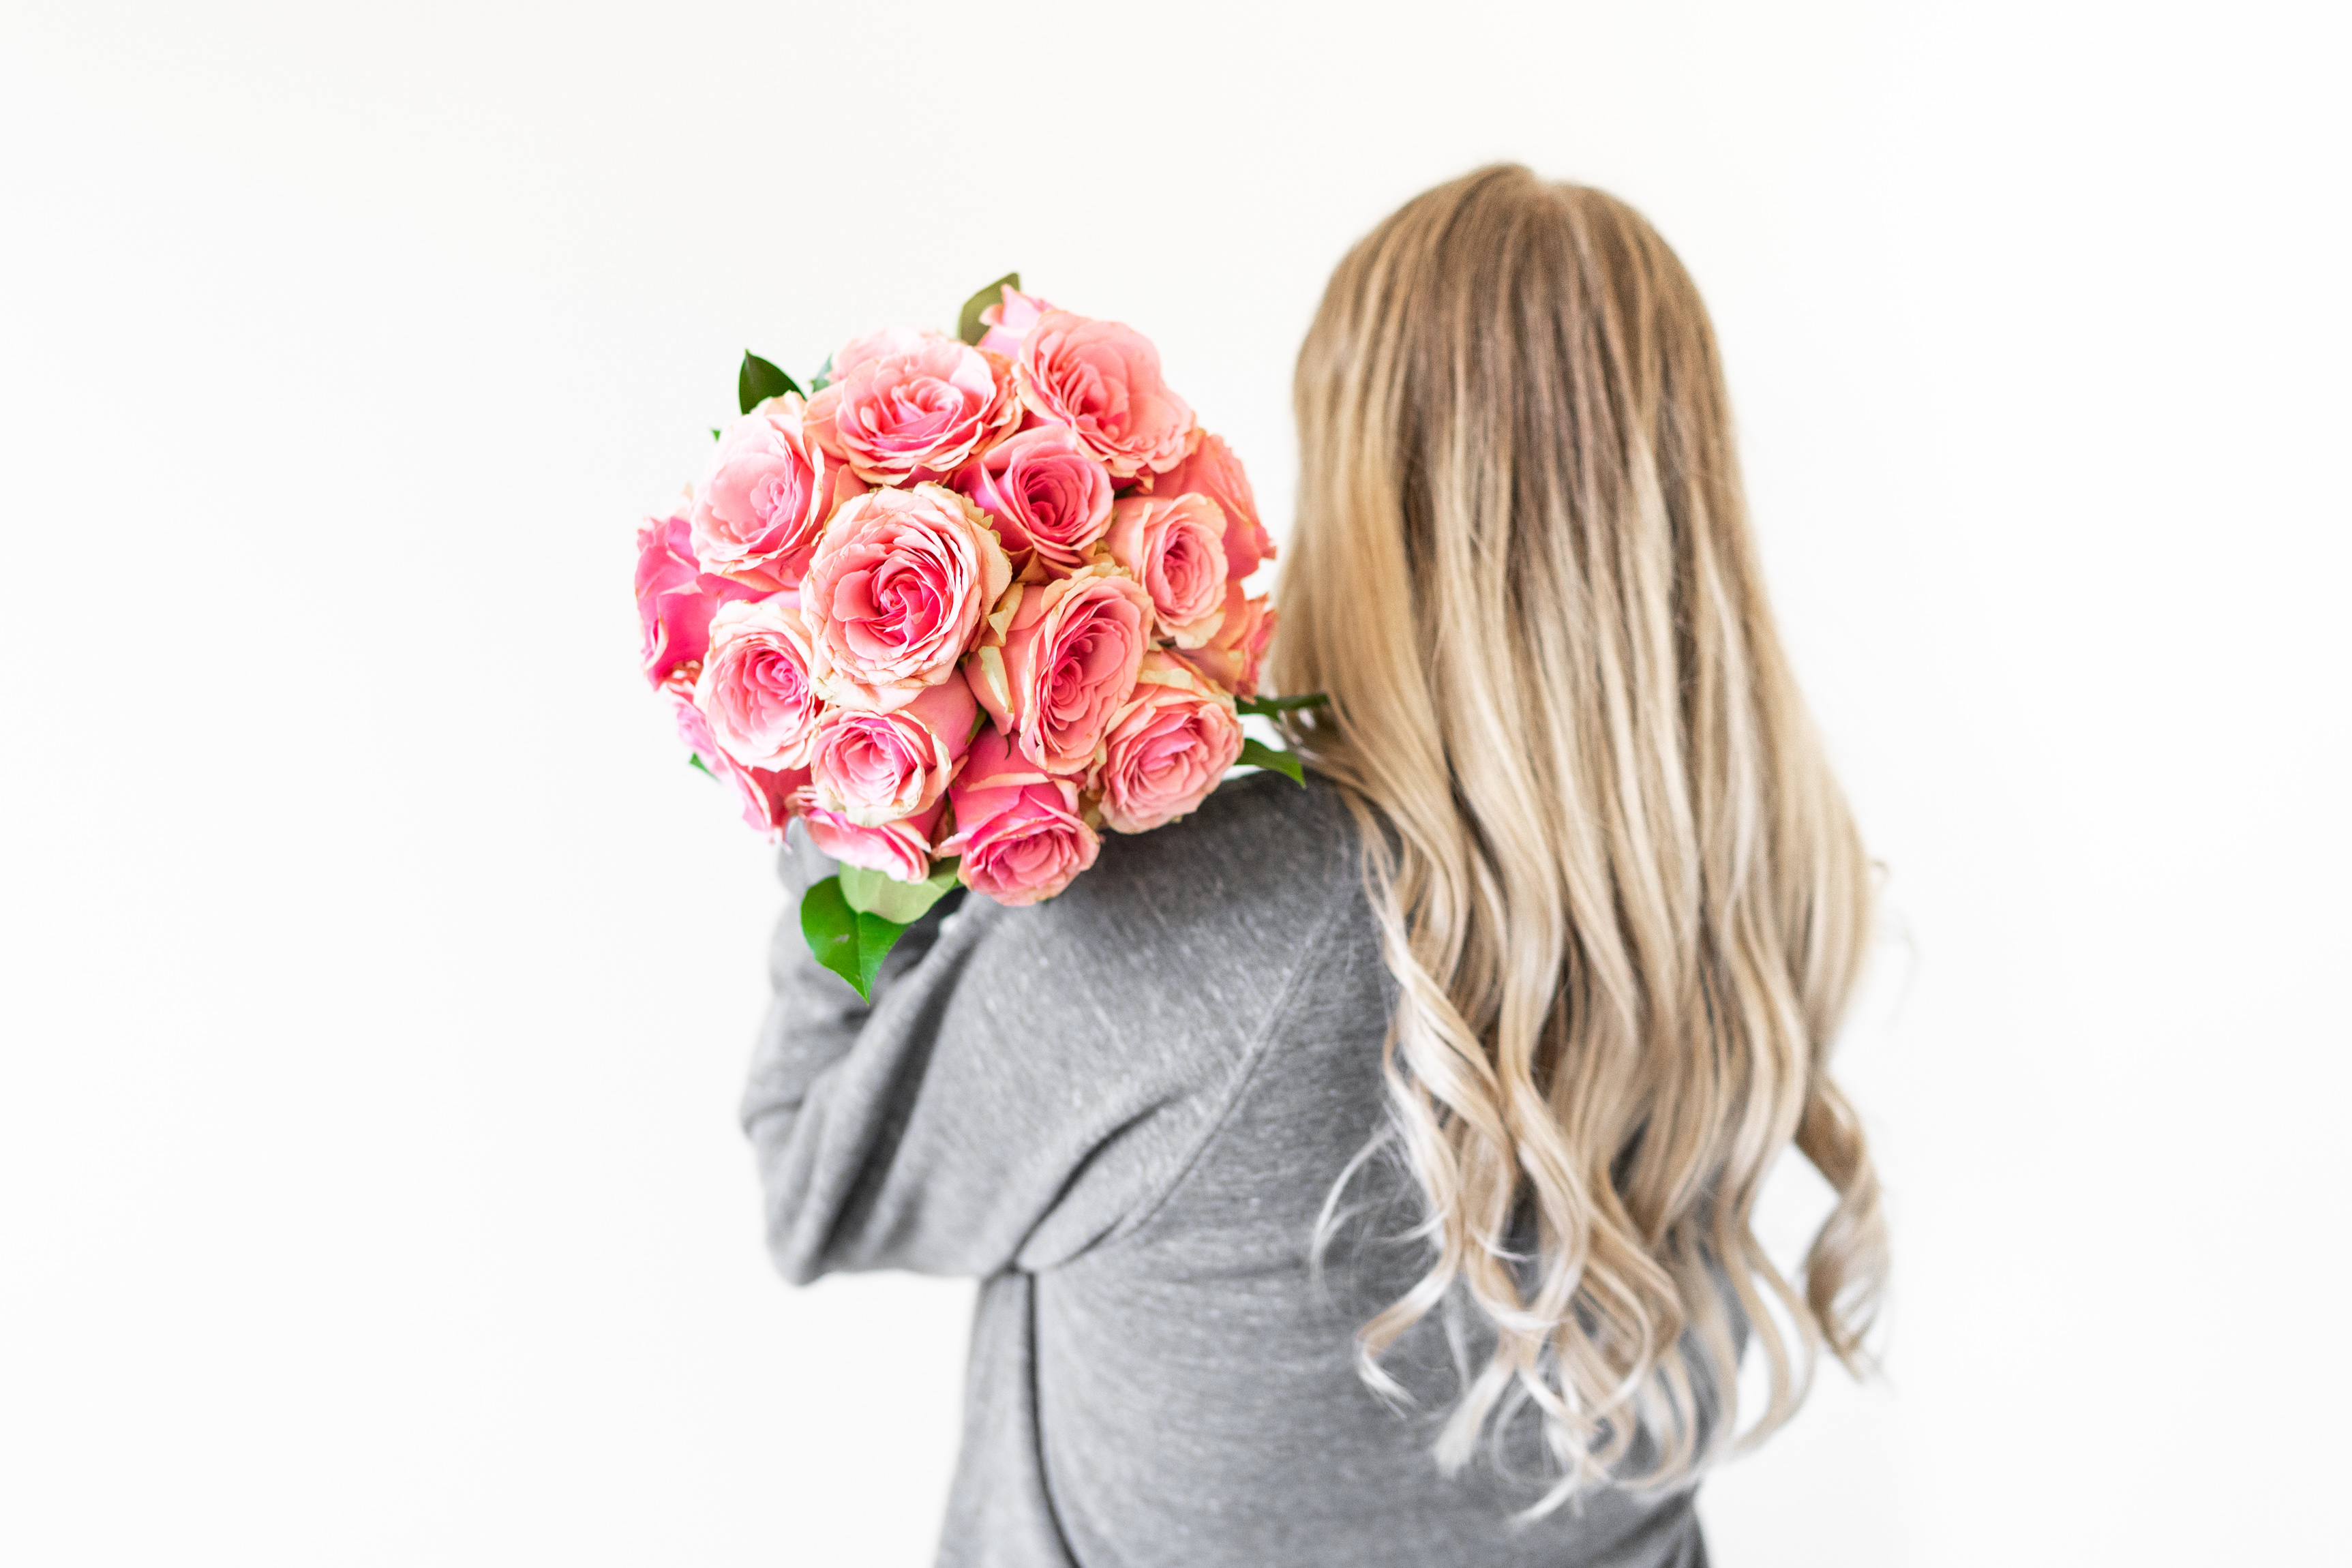 The Top 5 Favorite Pink Flower Arrangements